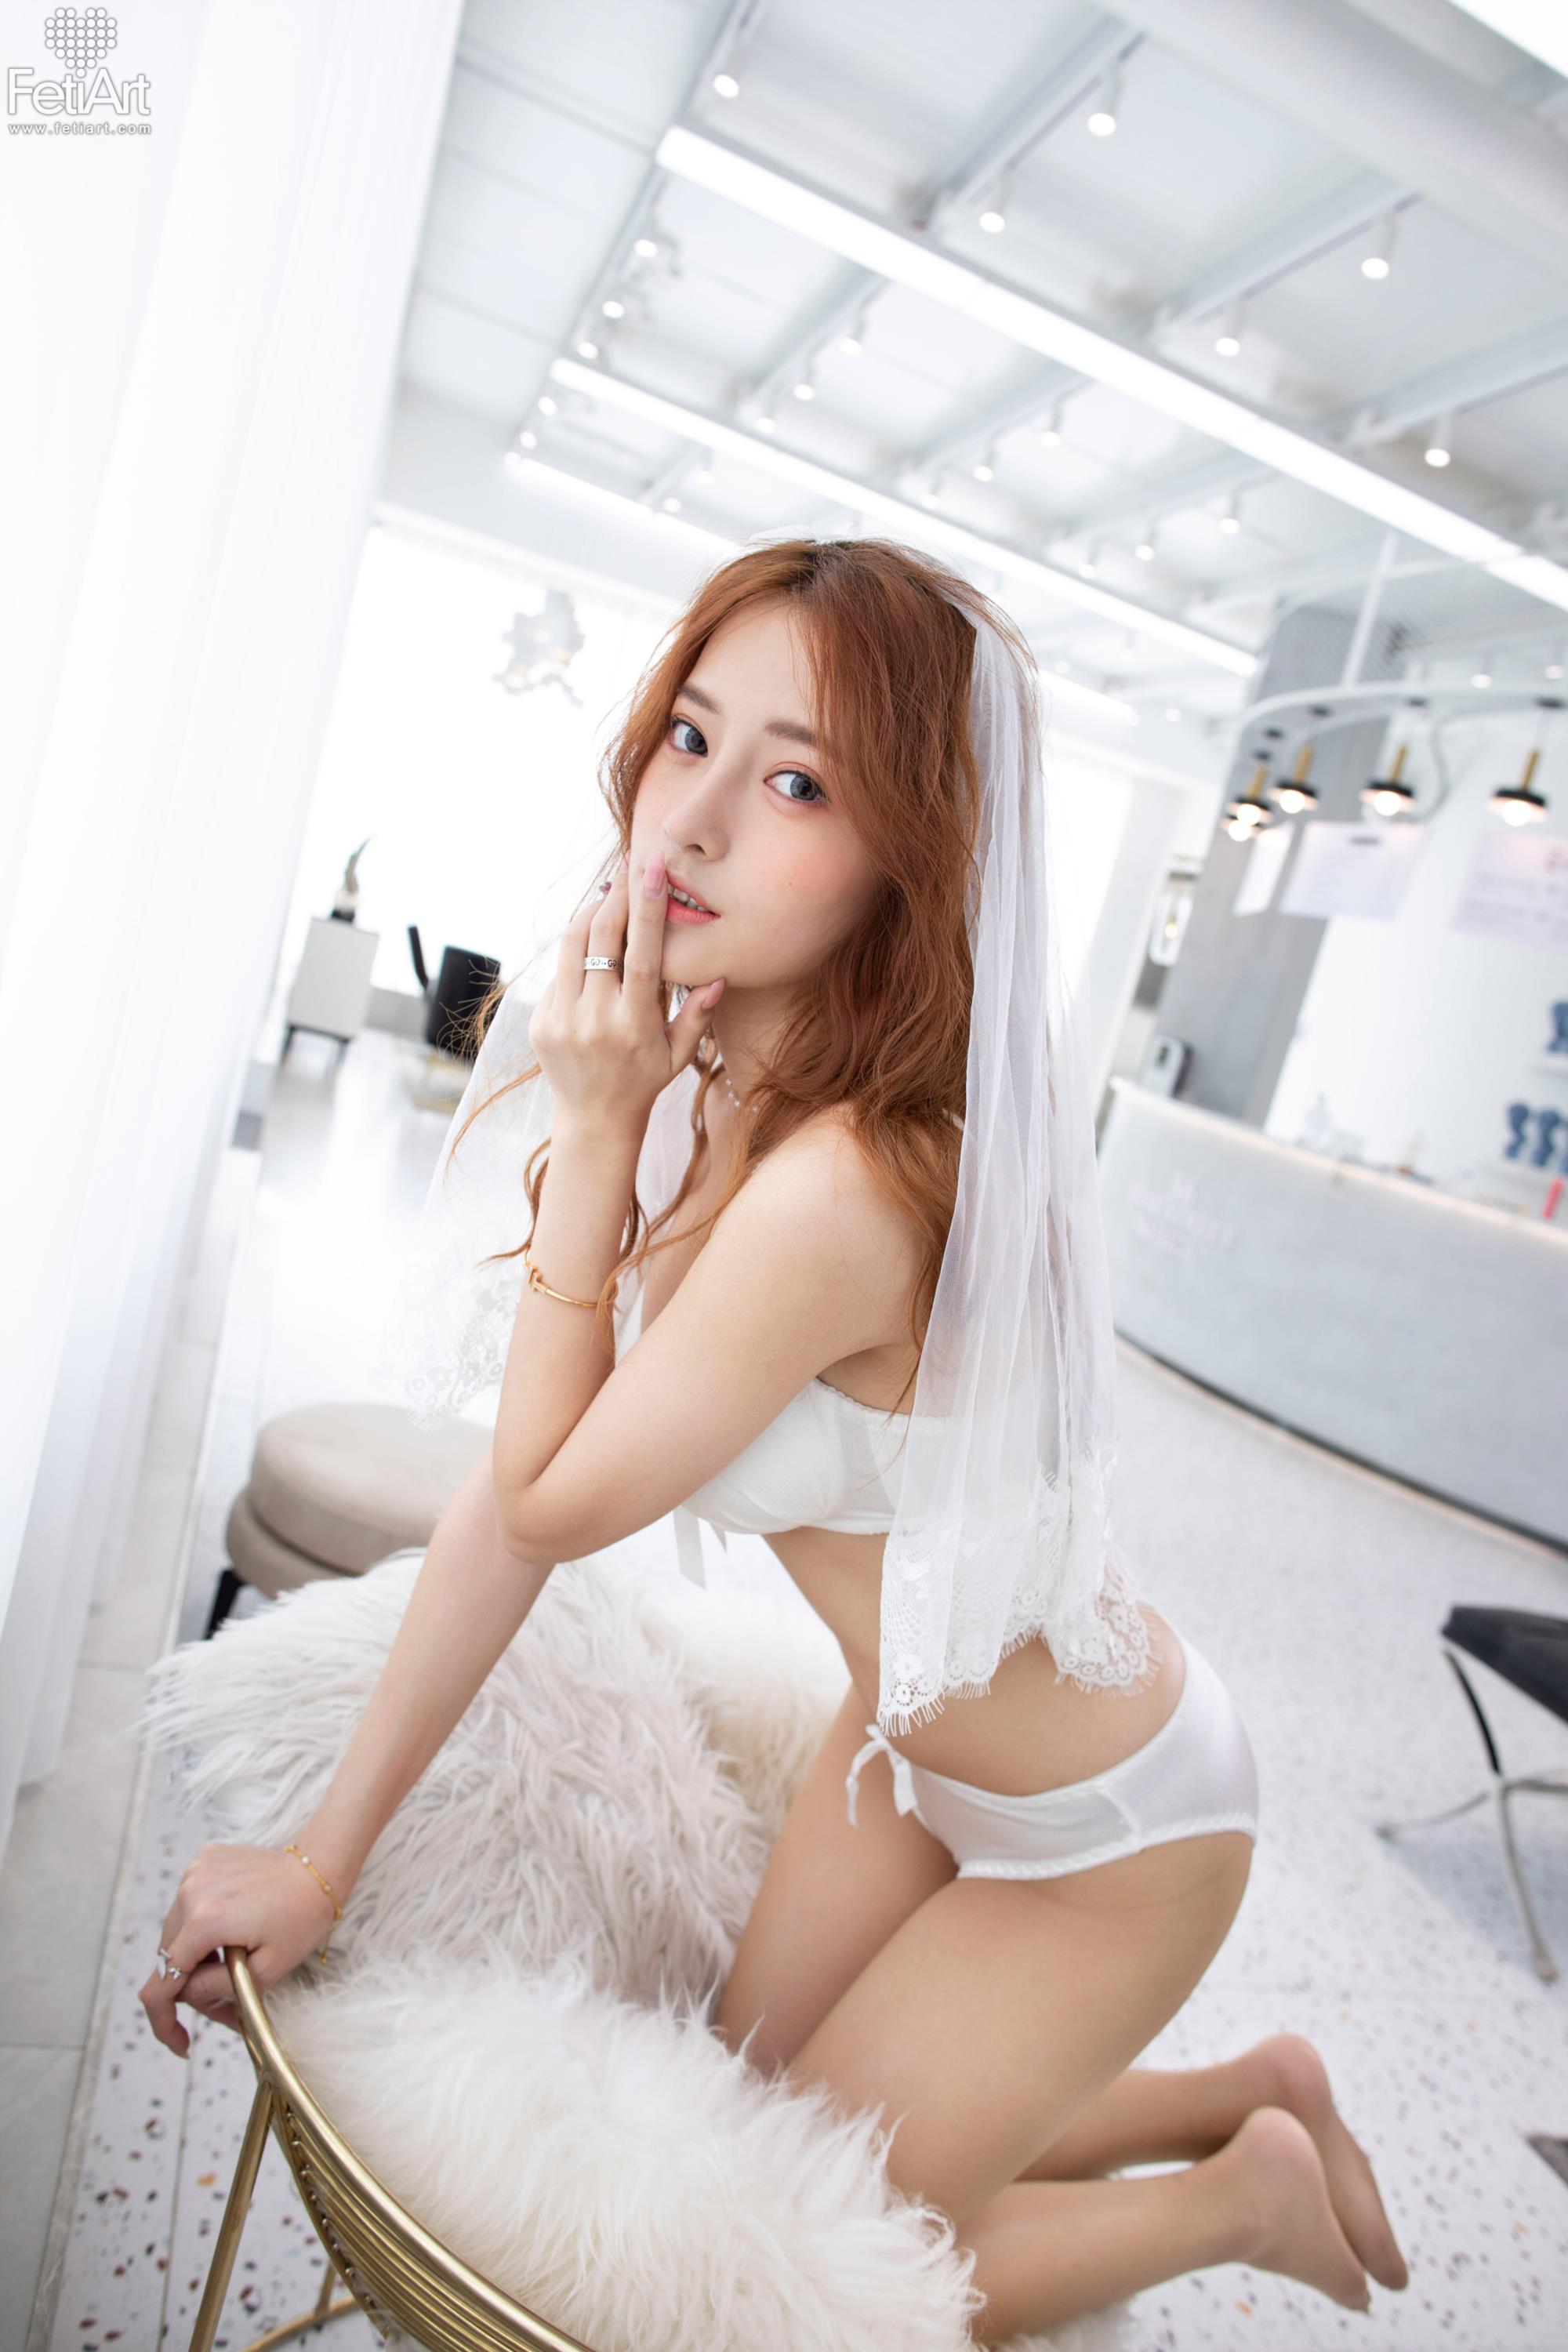 FetiArt 尚物集 No.073 A Pure White Morning MODEL Cherry - 8.jpg